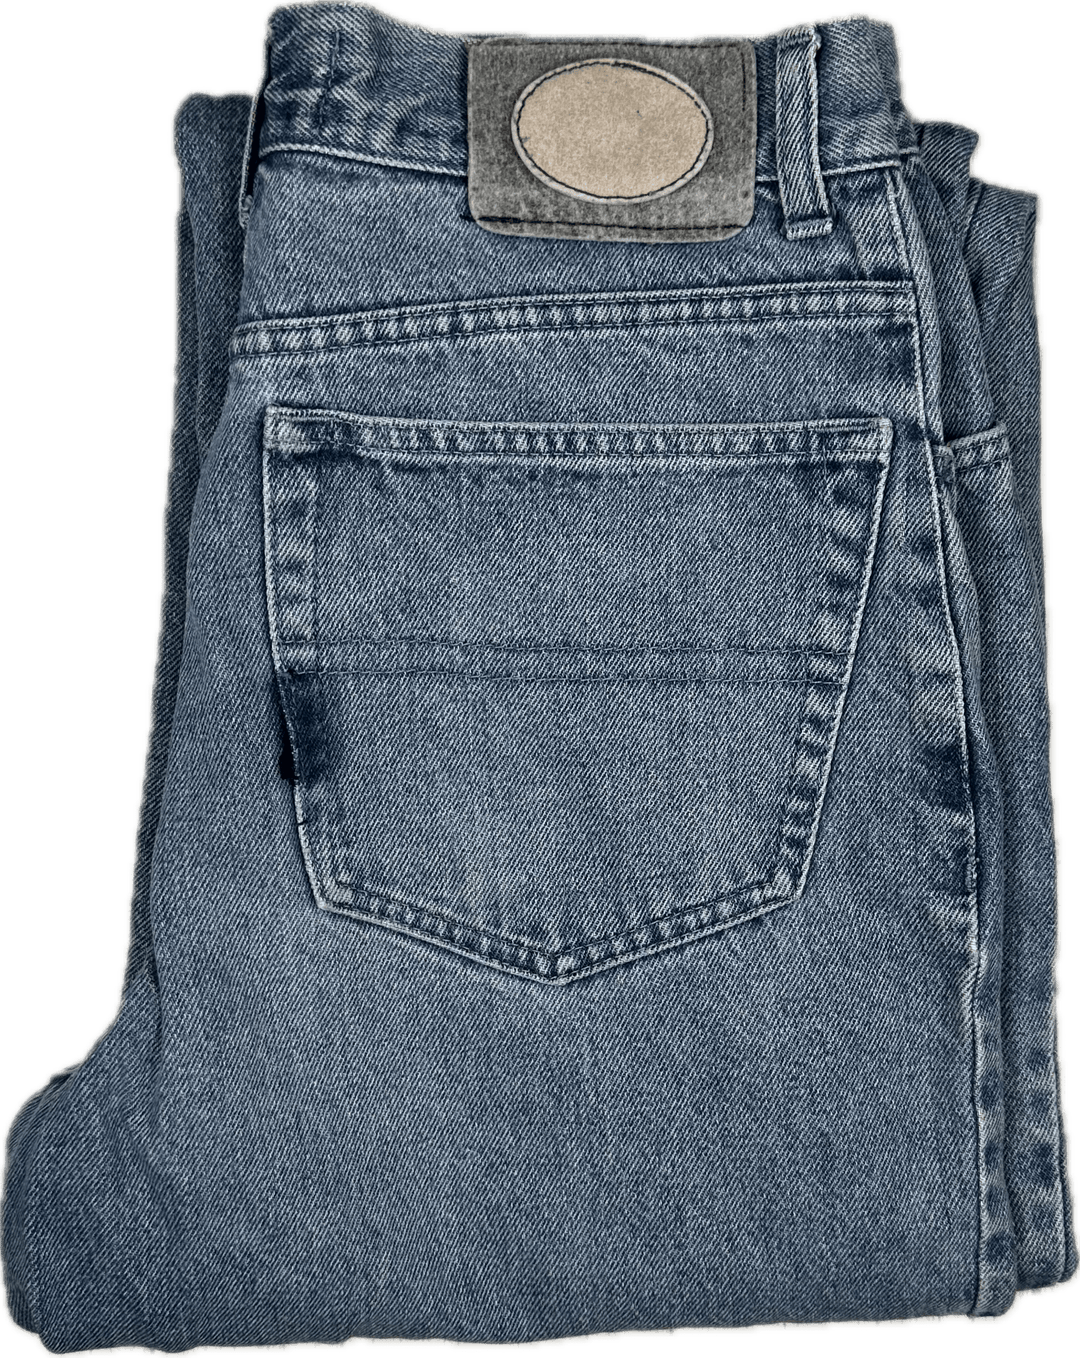 Trussardi 90s Jeans Italian Denim Tapered Fit Jeans -Suit 31" - Jean Pool